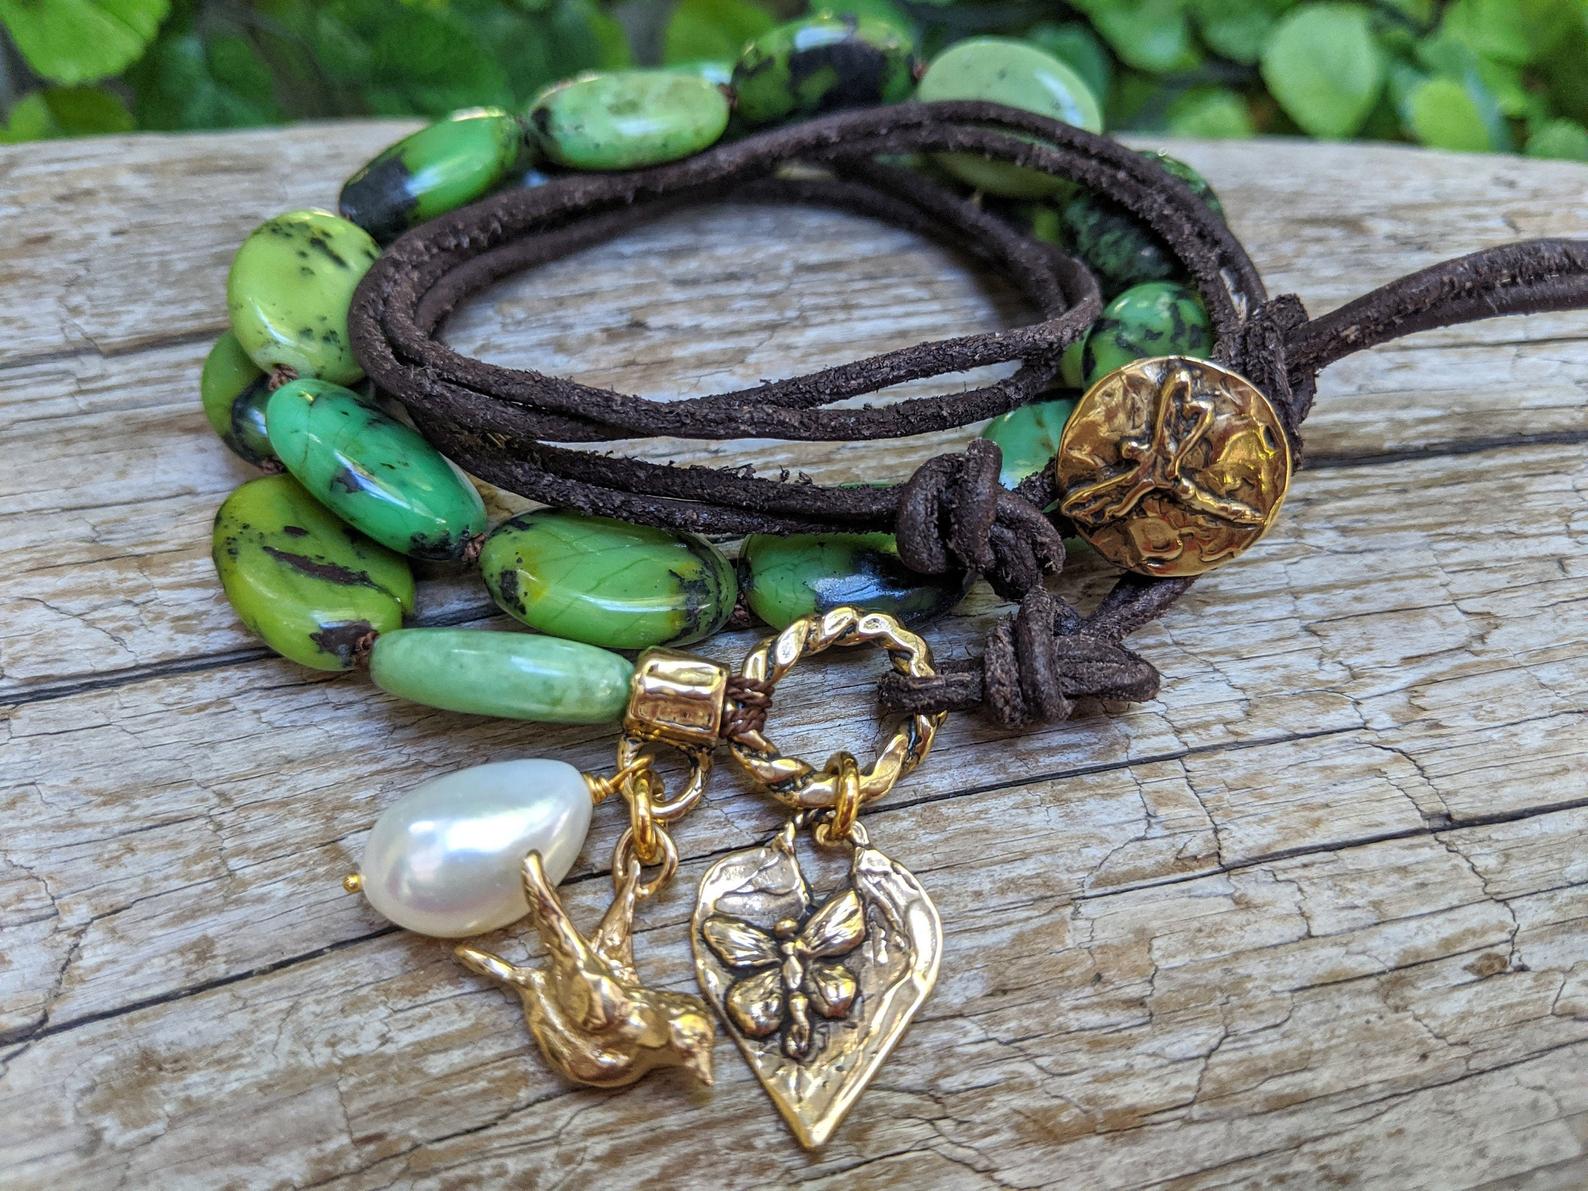 Handmade artisan chrysoprase gemstone wrap bracelet with bird and butterfly heart charms by Aurora Creative Jewellery